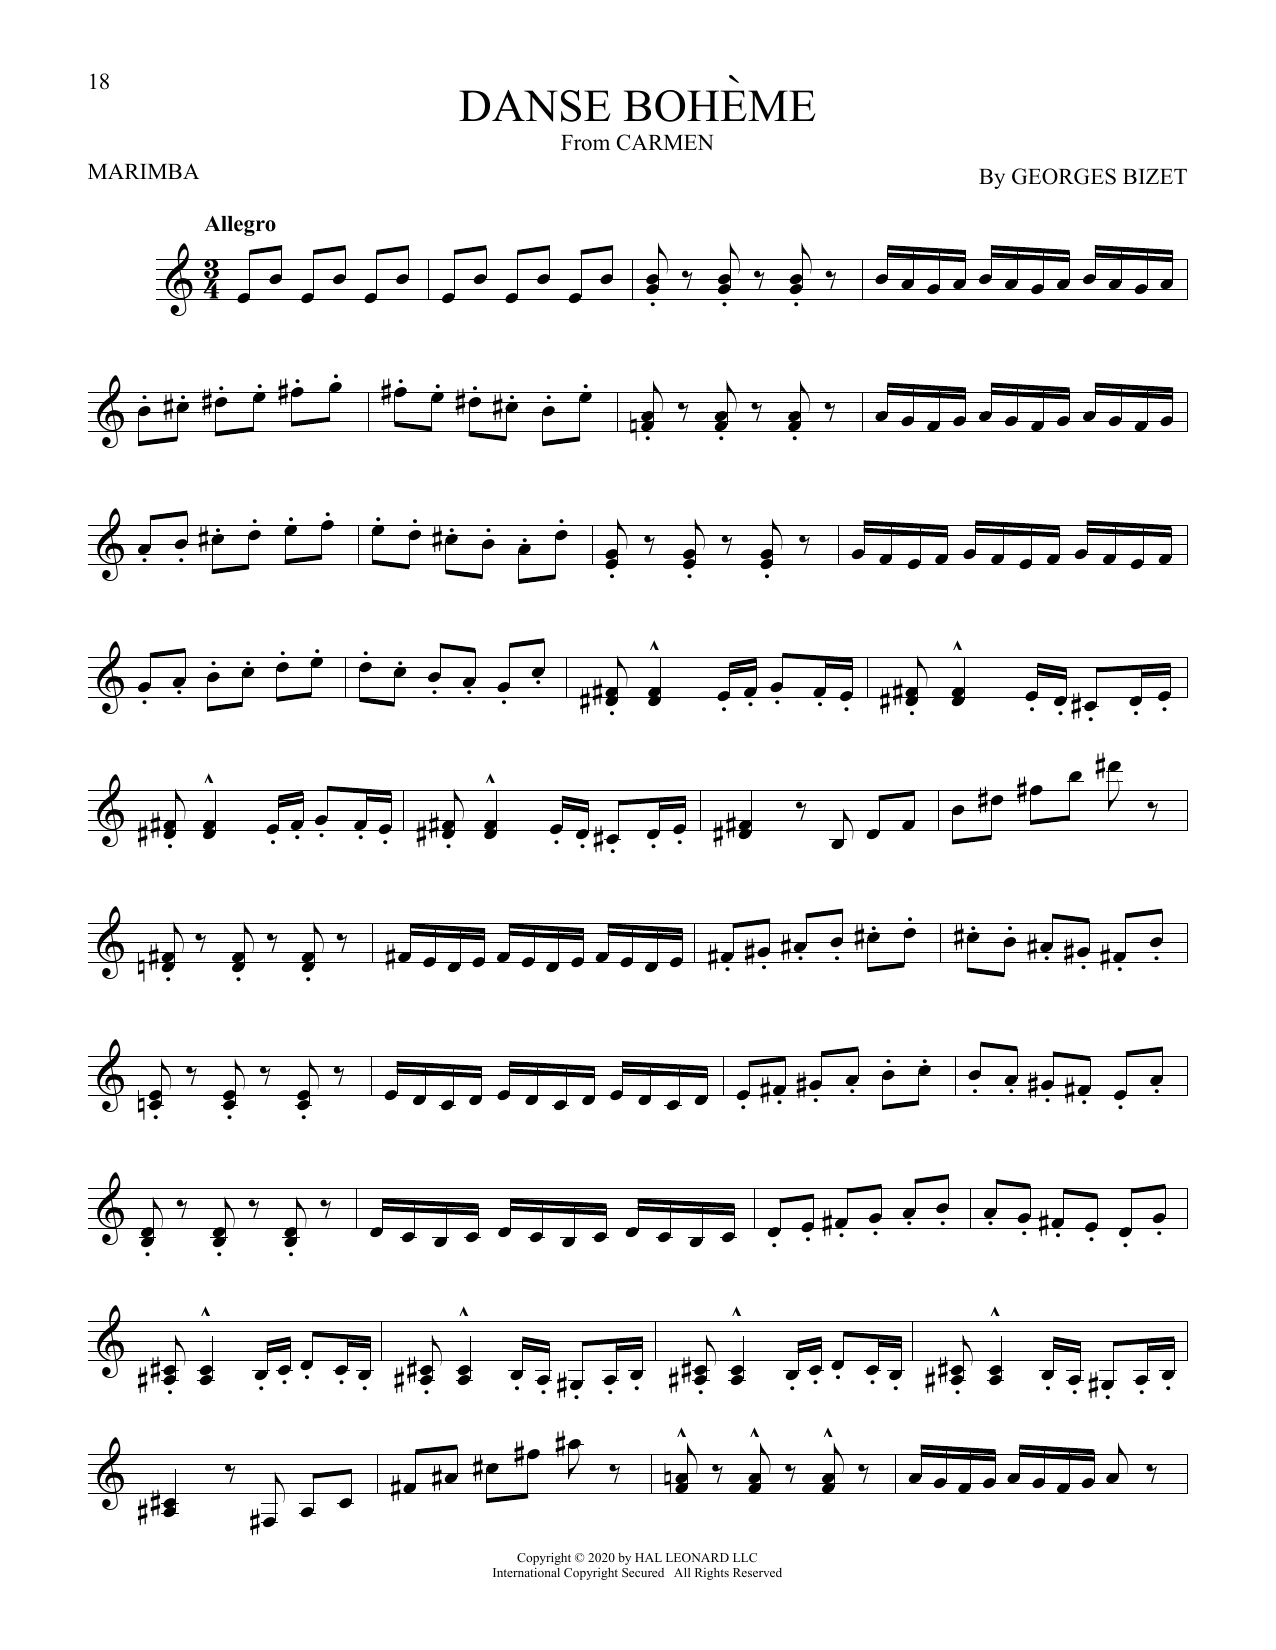 Georges Bizet Danse Boheme Sheet Music Notes & Chords for Marimba Solo - Download or Print PDF